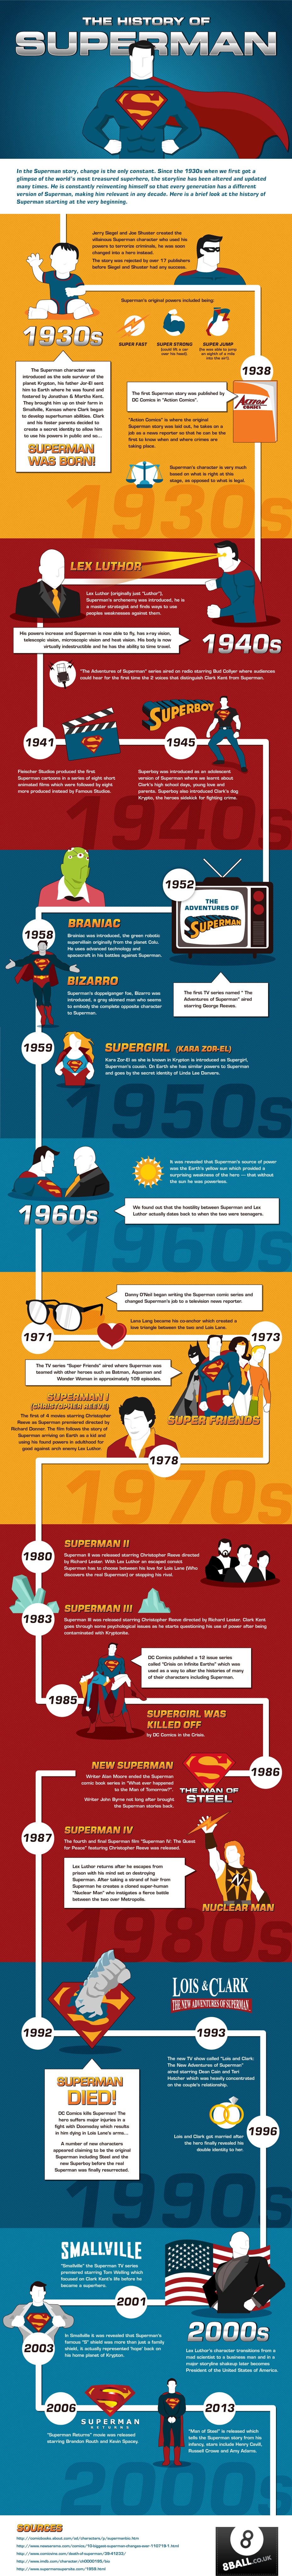 superman_infographic